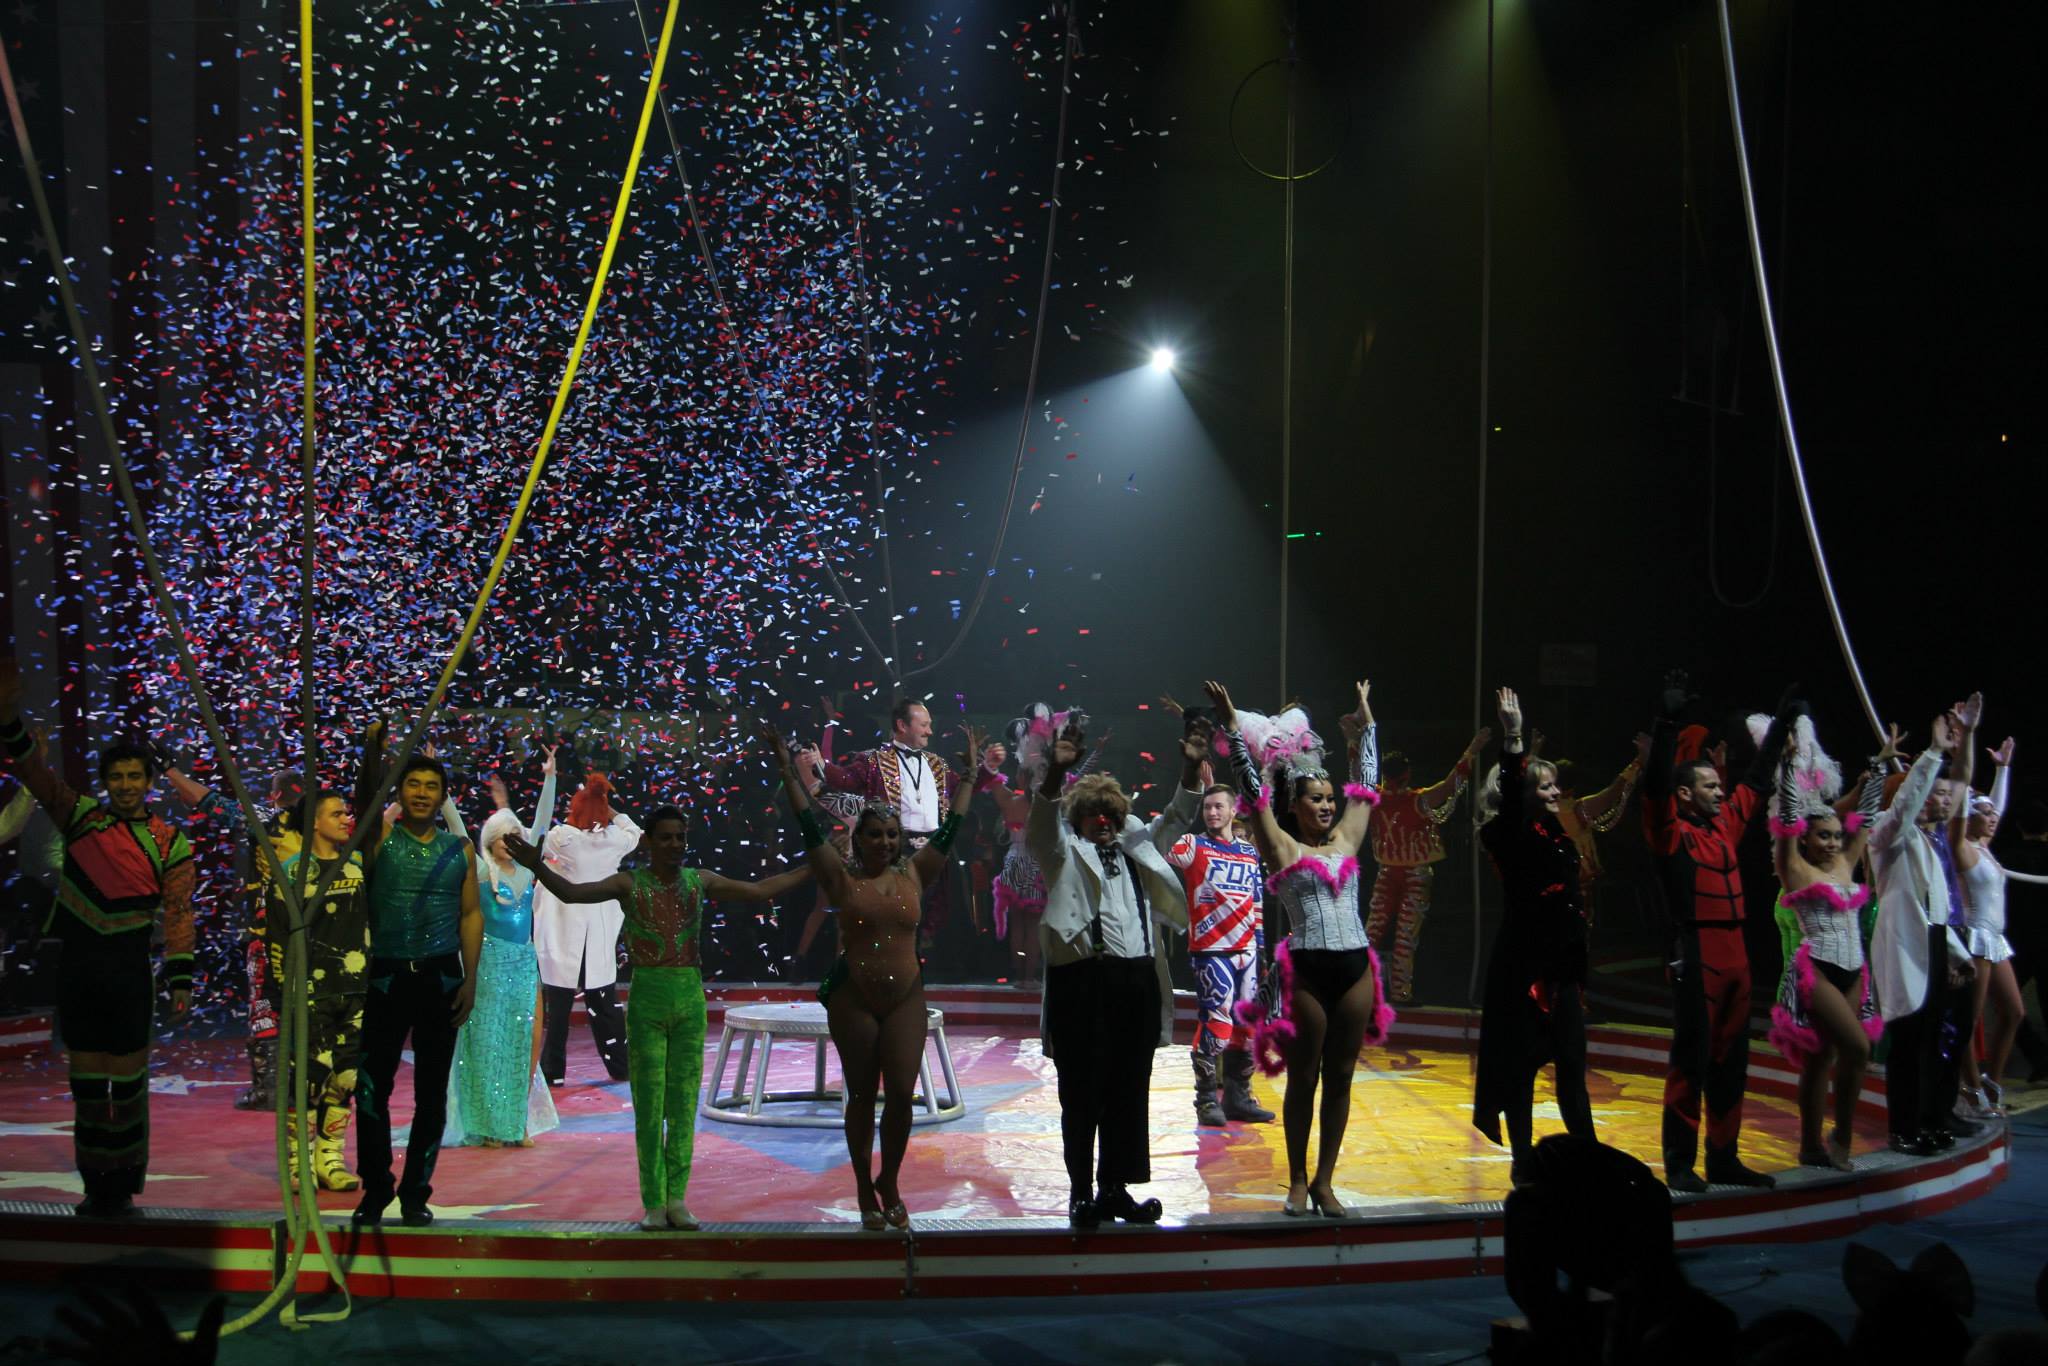 Finale at Jordan world circus